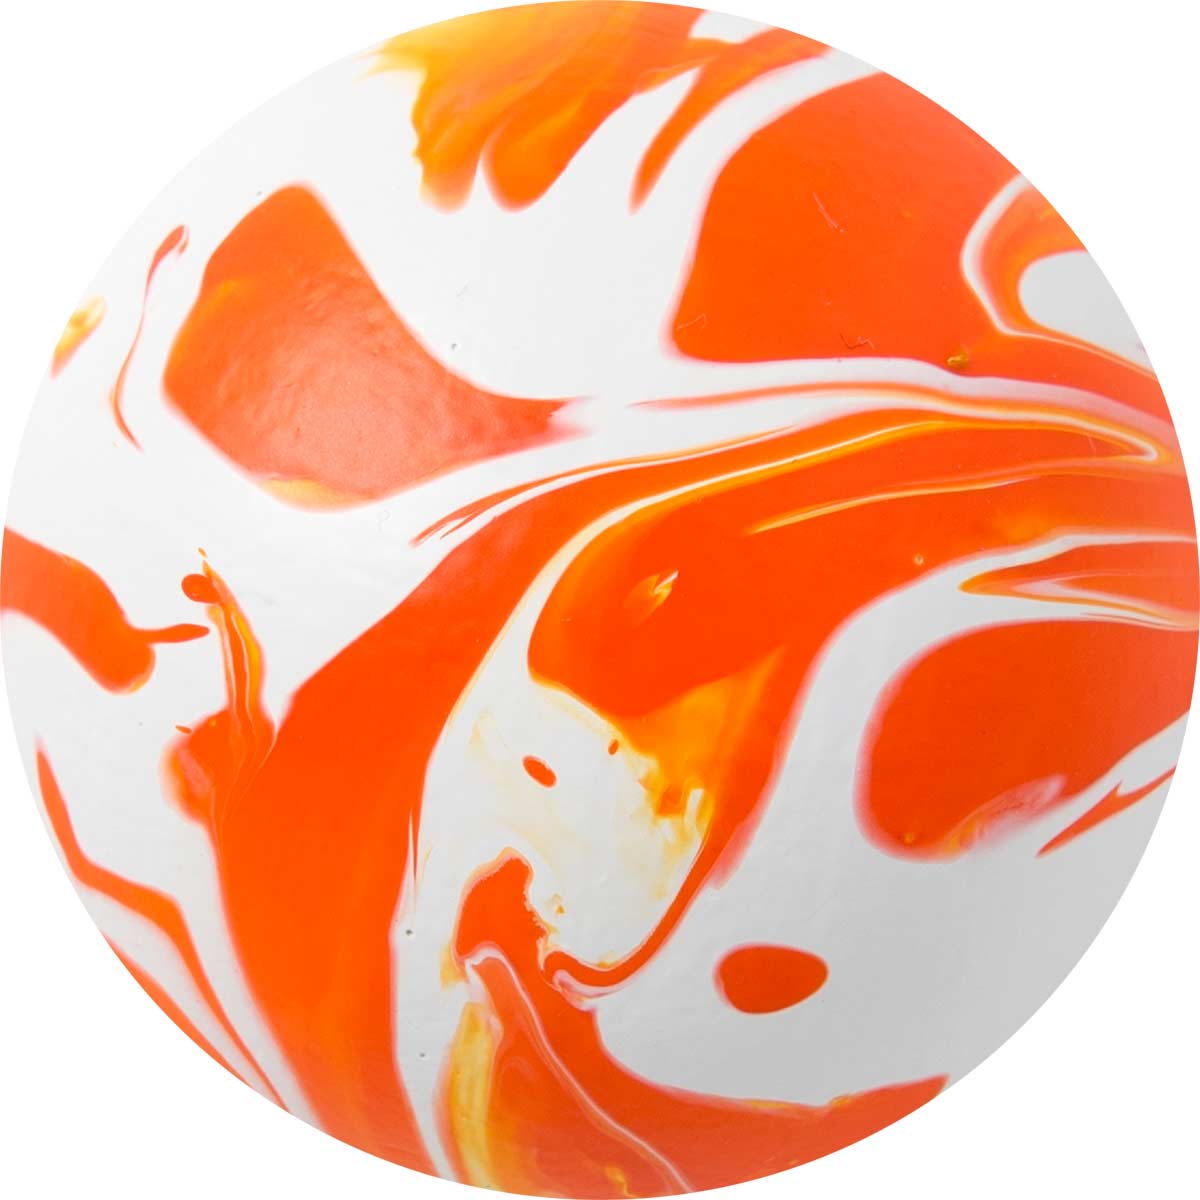 FolkArt ® Marbling Paint - Orange, 2 oz. - 16940